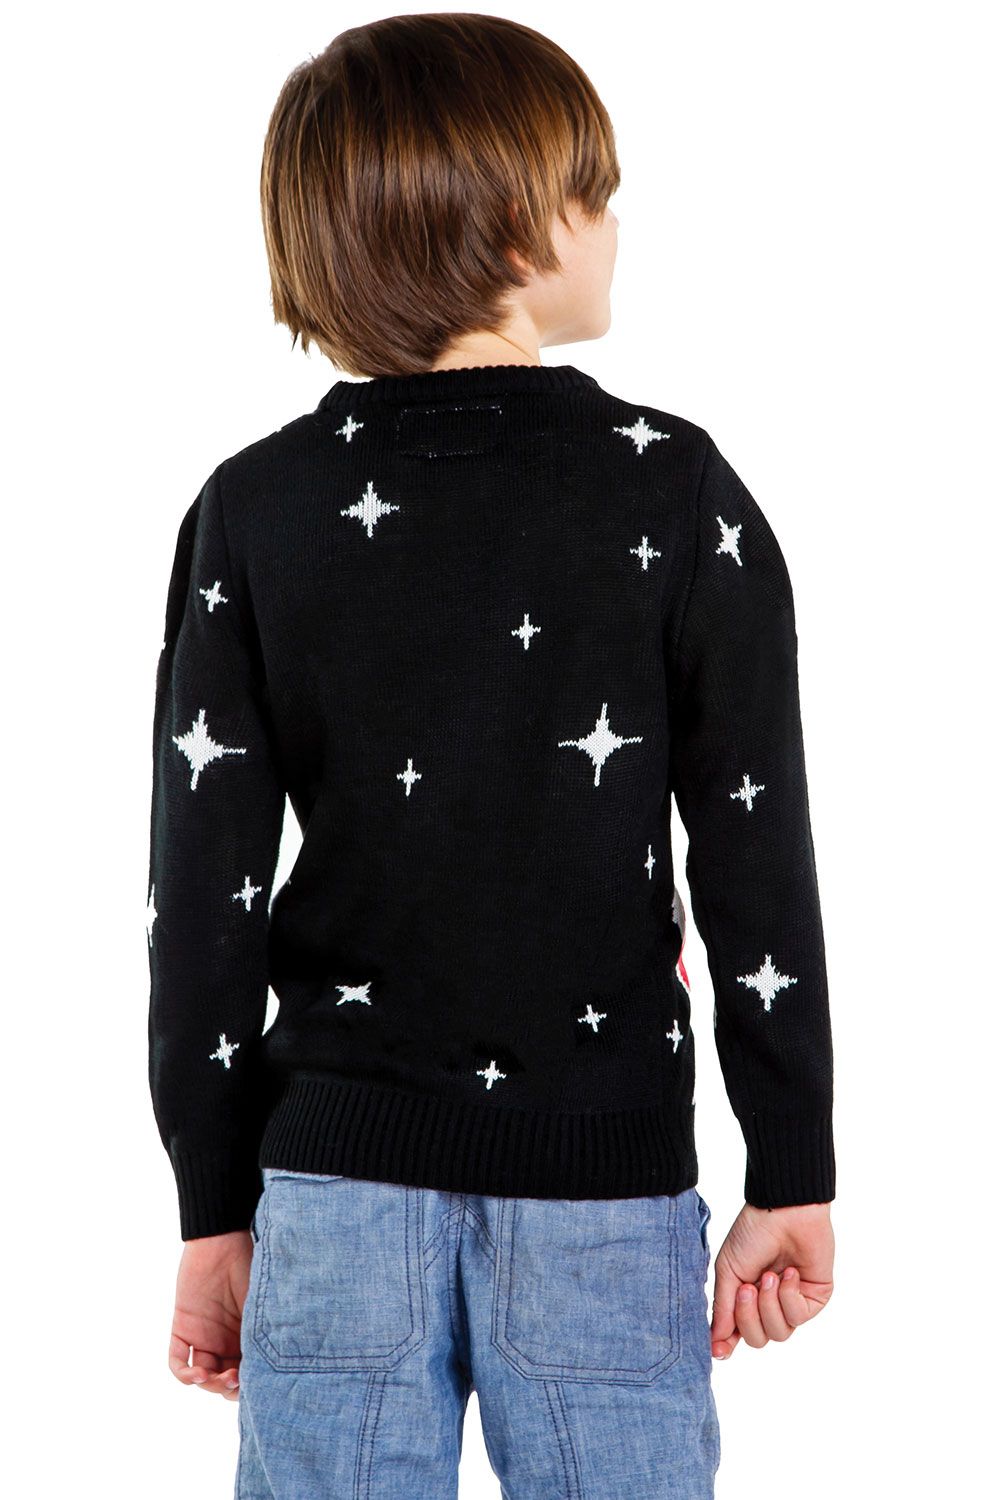 Boys Unicorn Sweater